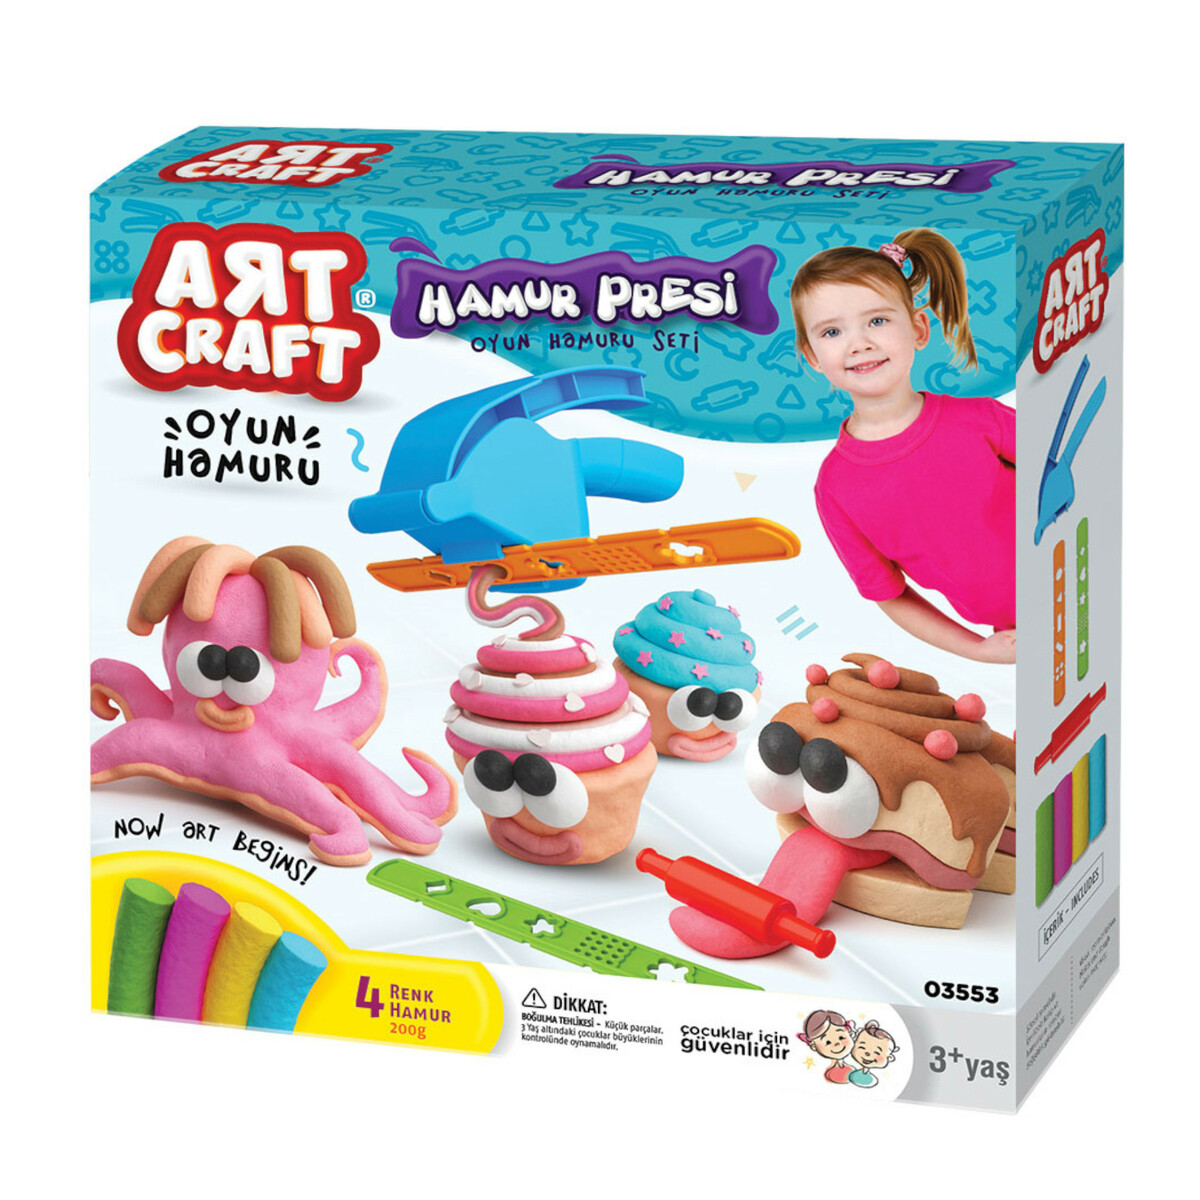 Dede Art Craft Dough Press Set 03553